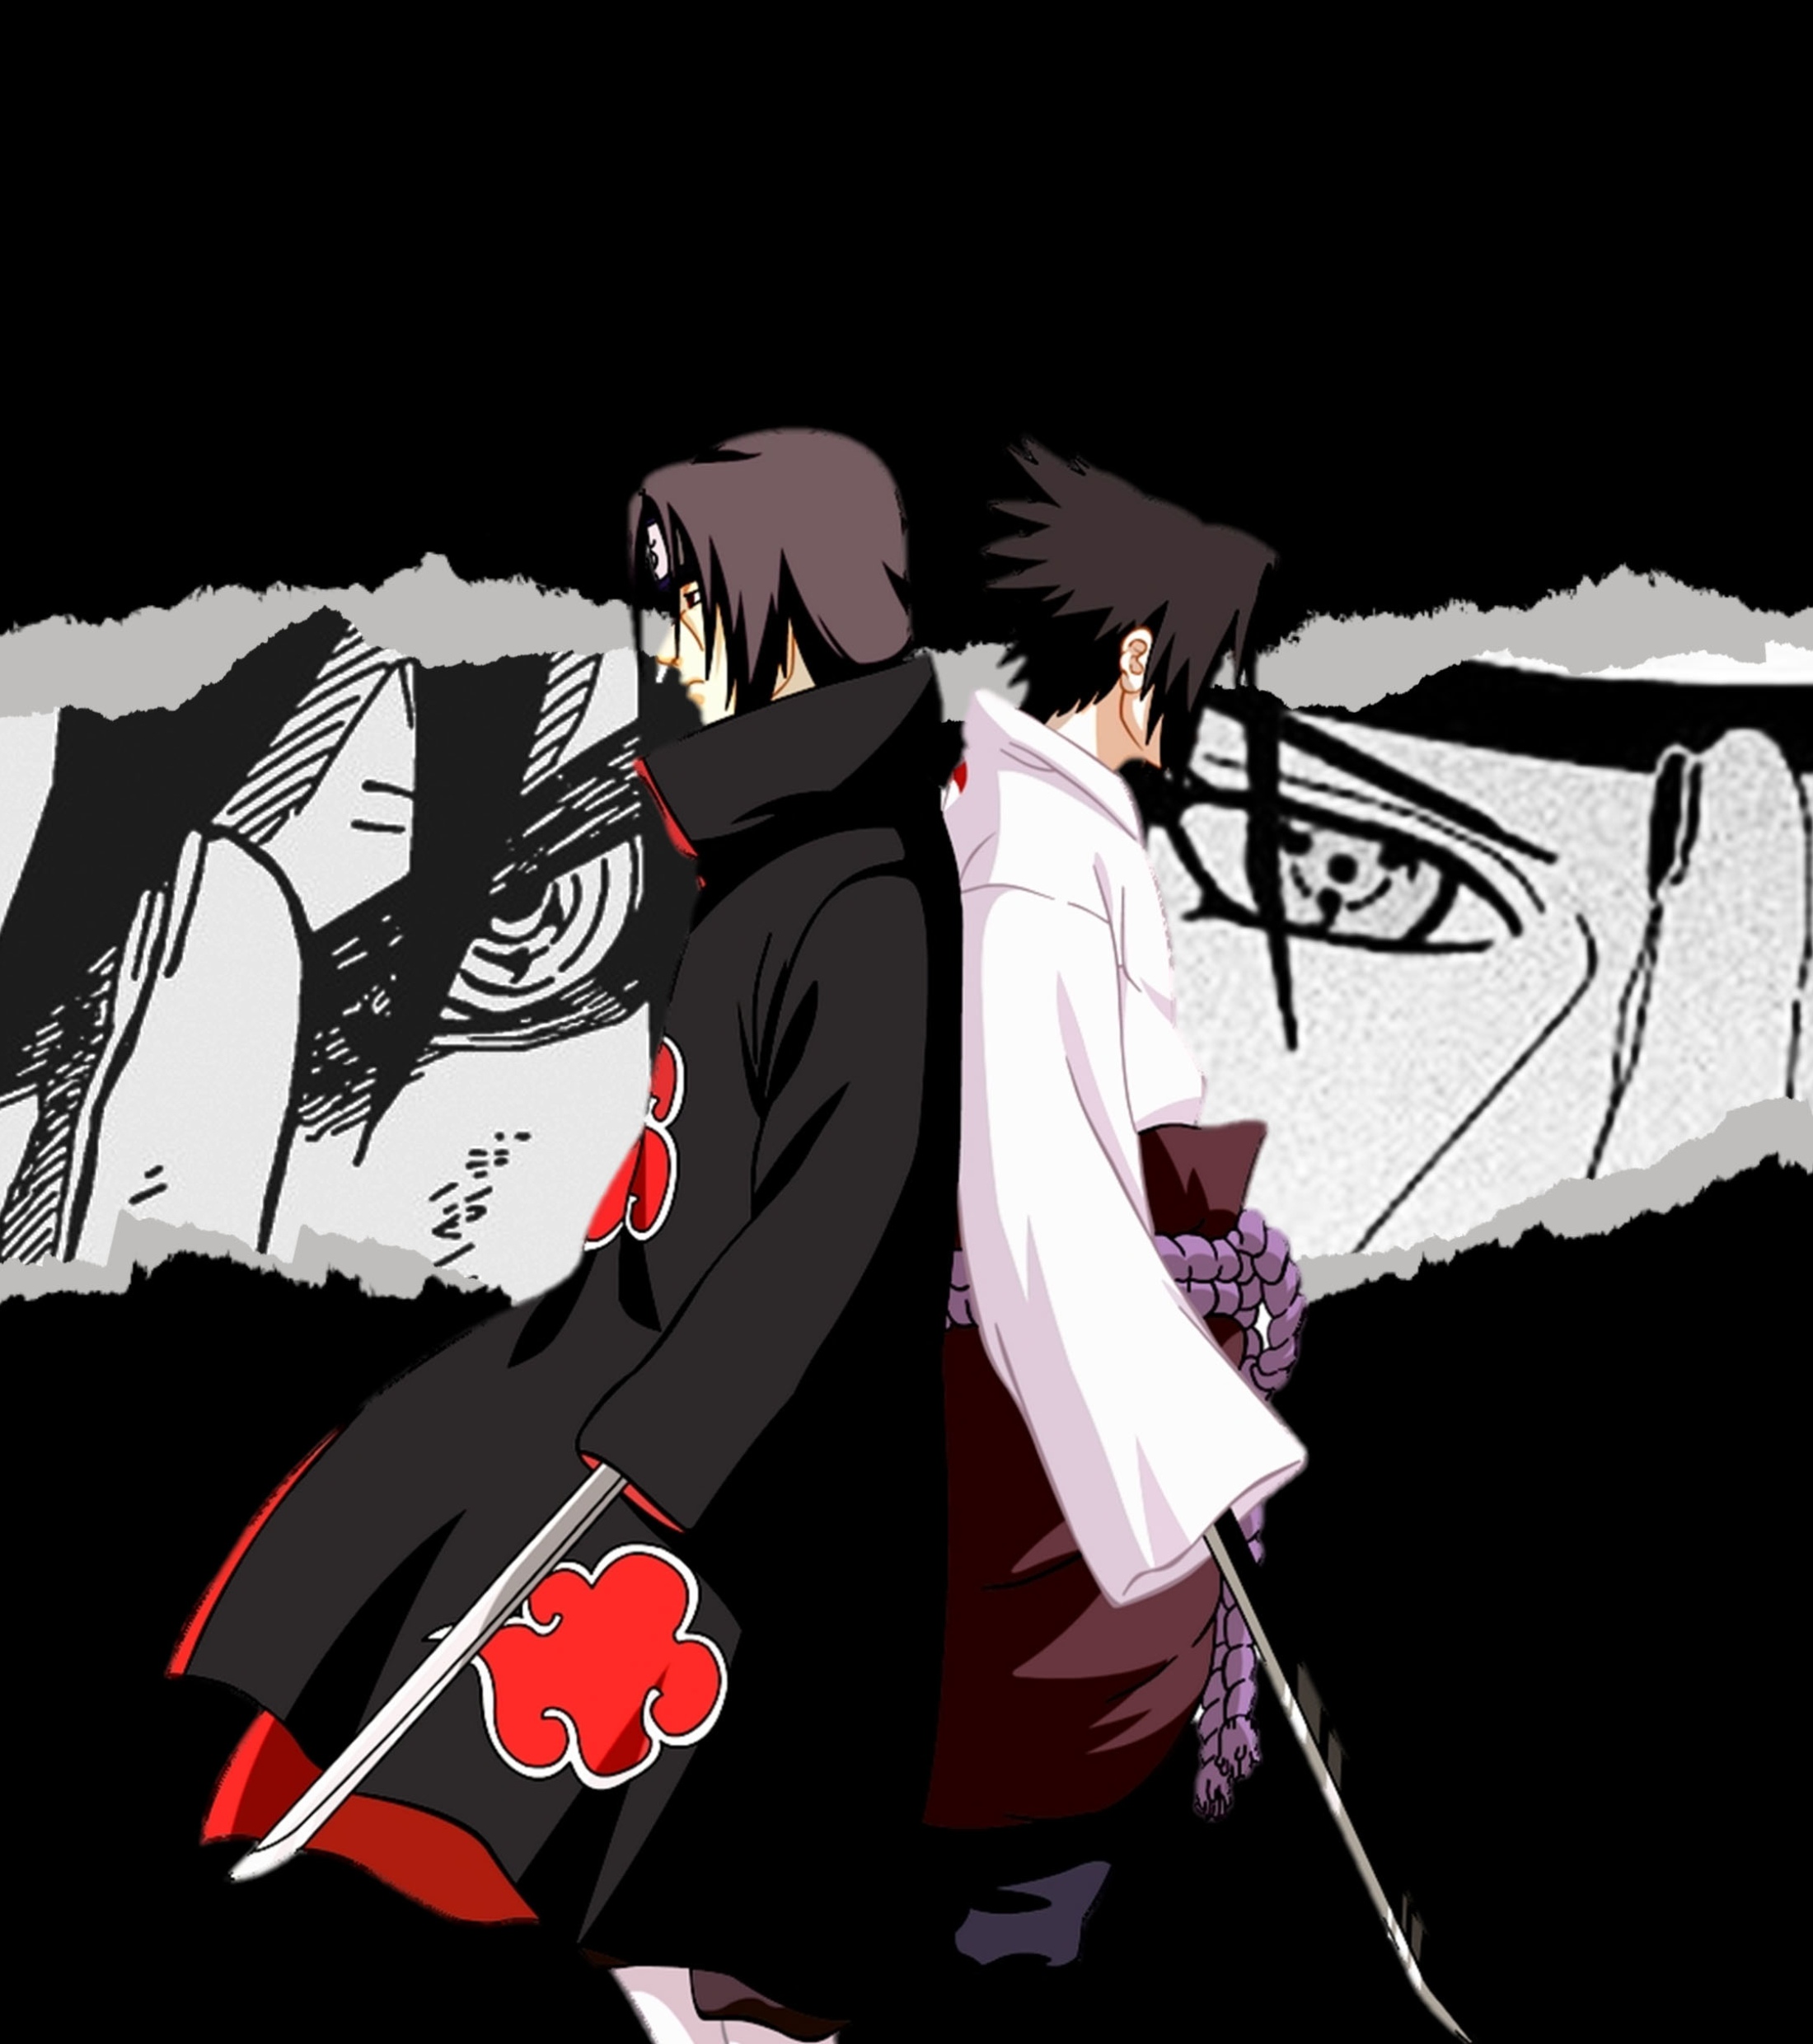 2200x2480 Itachi vs Sasuke 4K Naruto 2200x2480 Resolution Wallpaper, HD  Anime 4K Wallpapers, Images, Photos and Background - Wallpapers Den